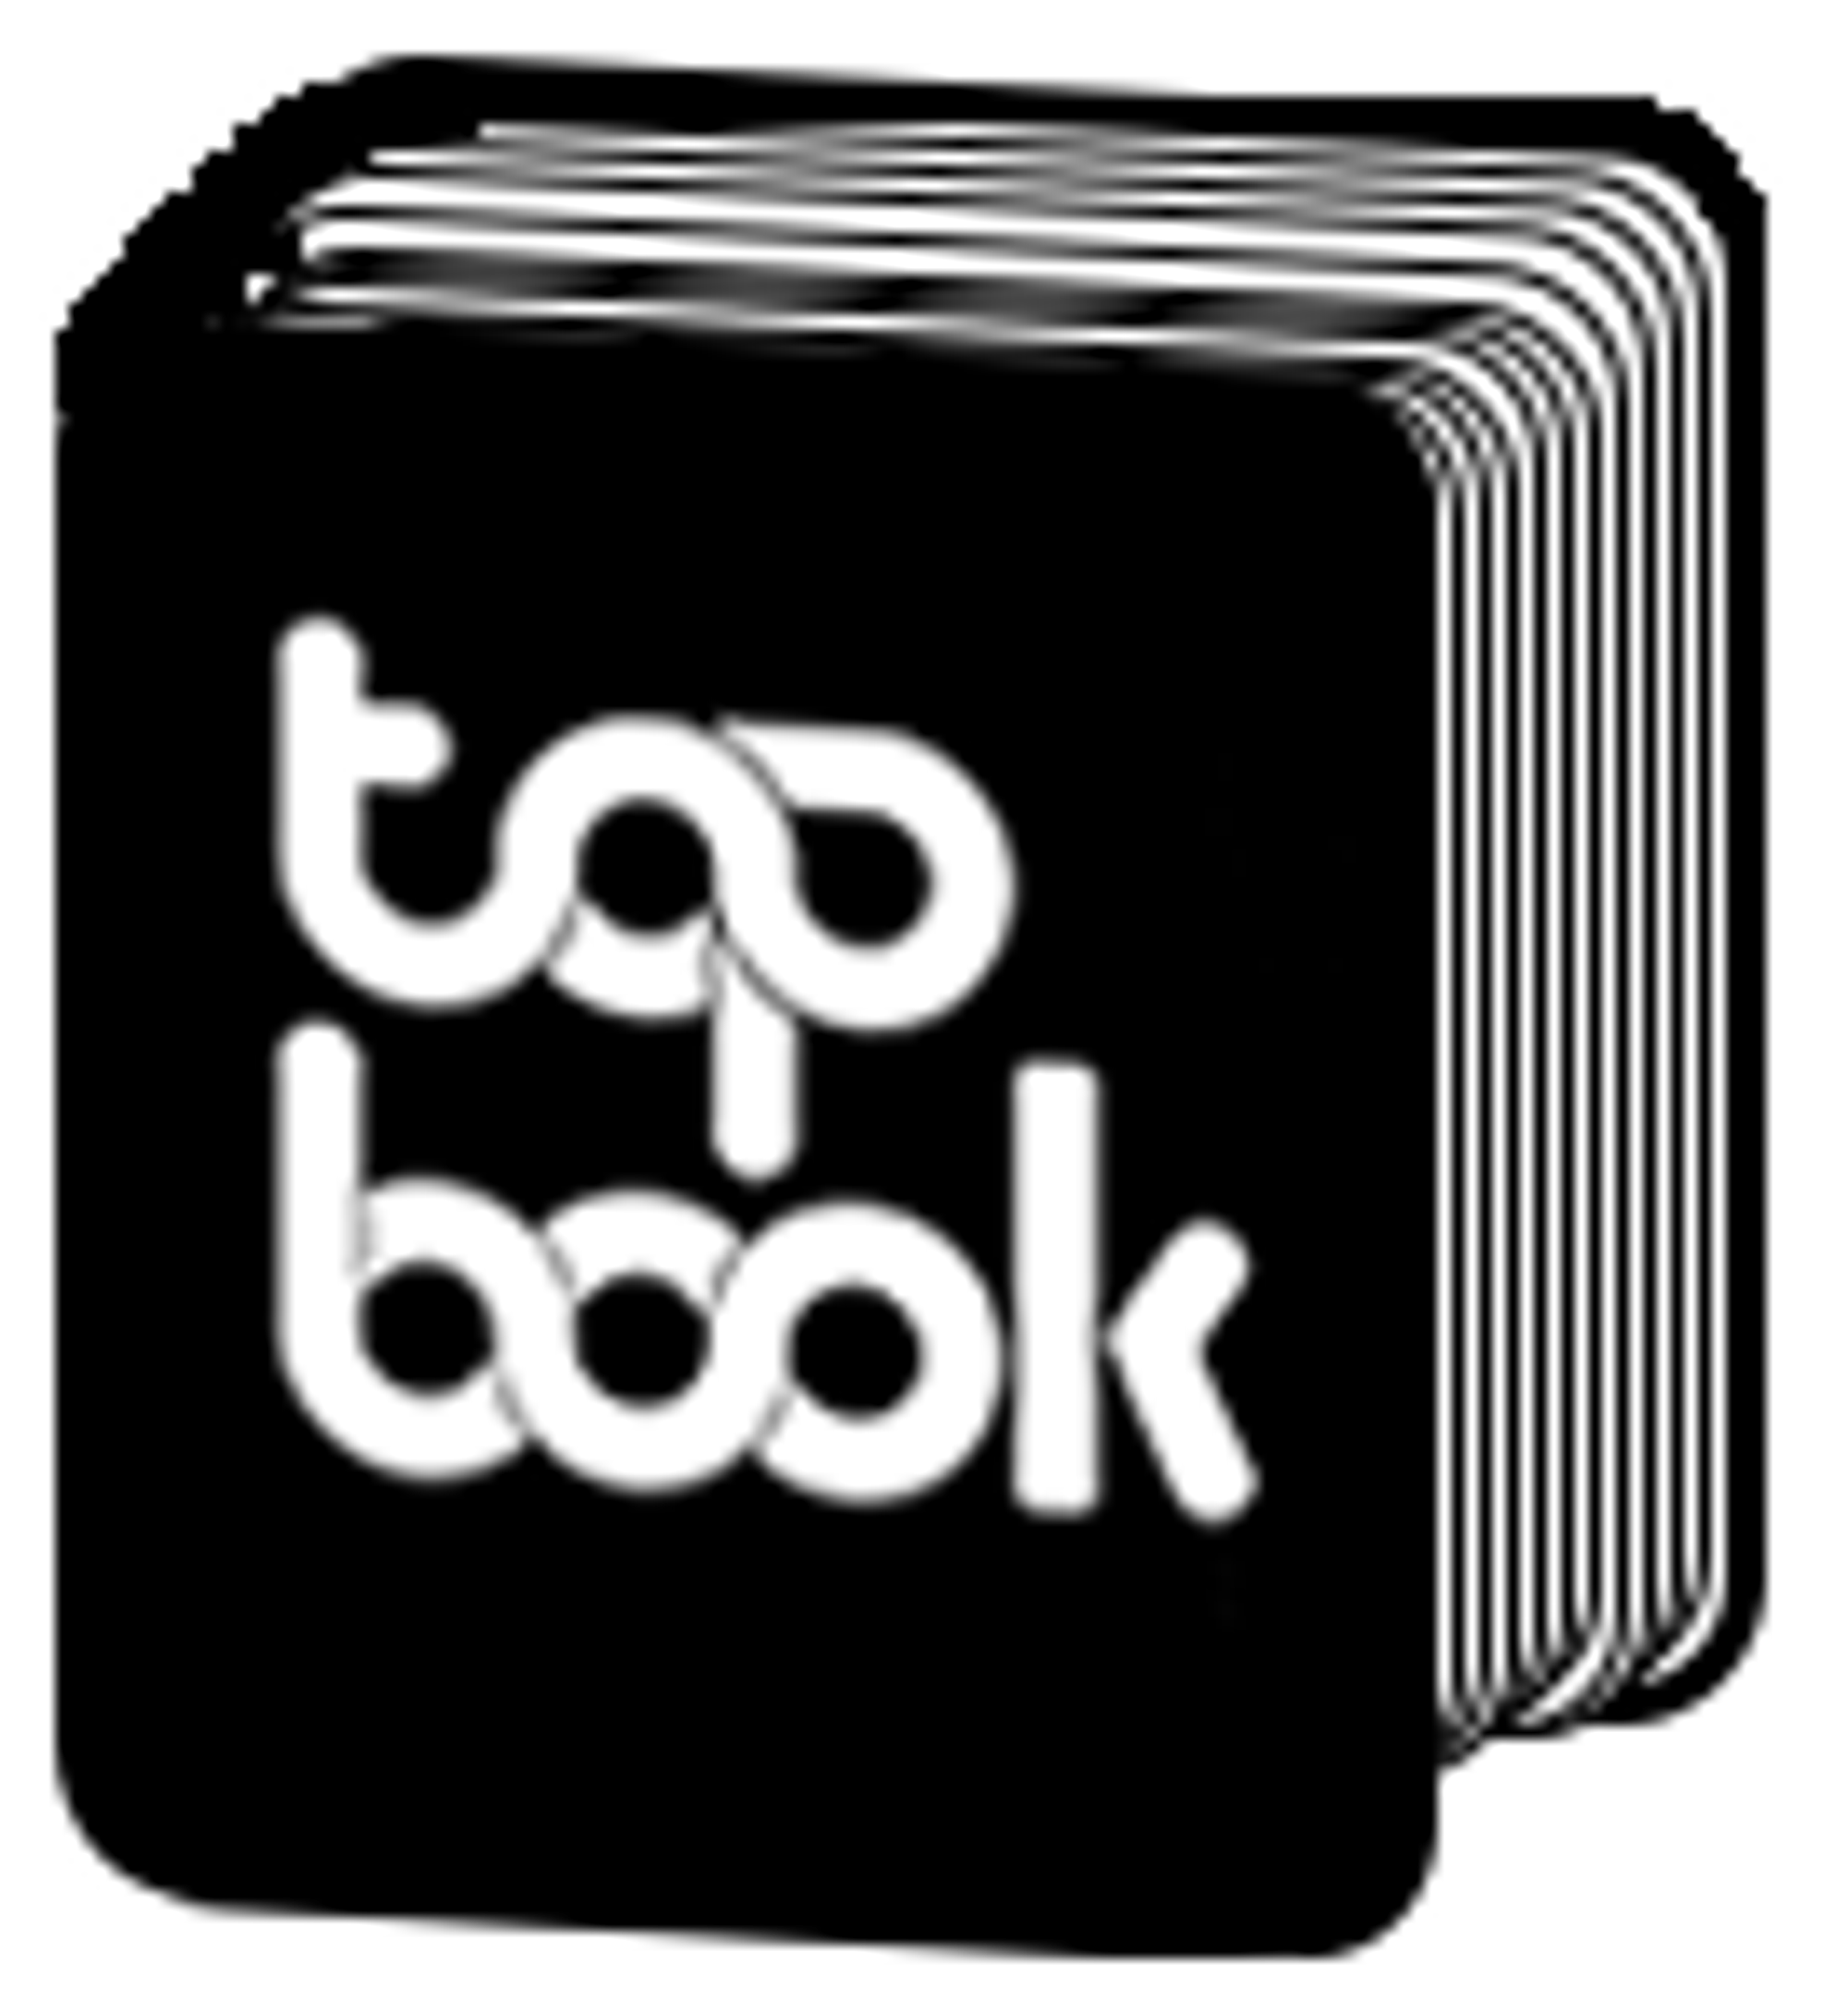 Topbook - 高效生活视频书